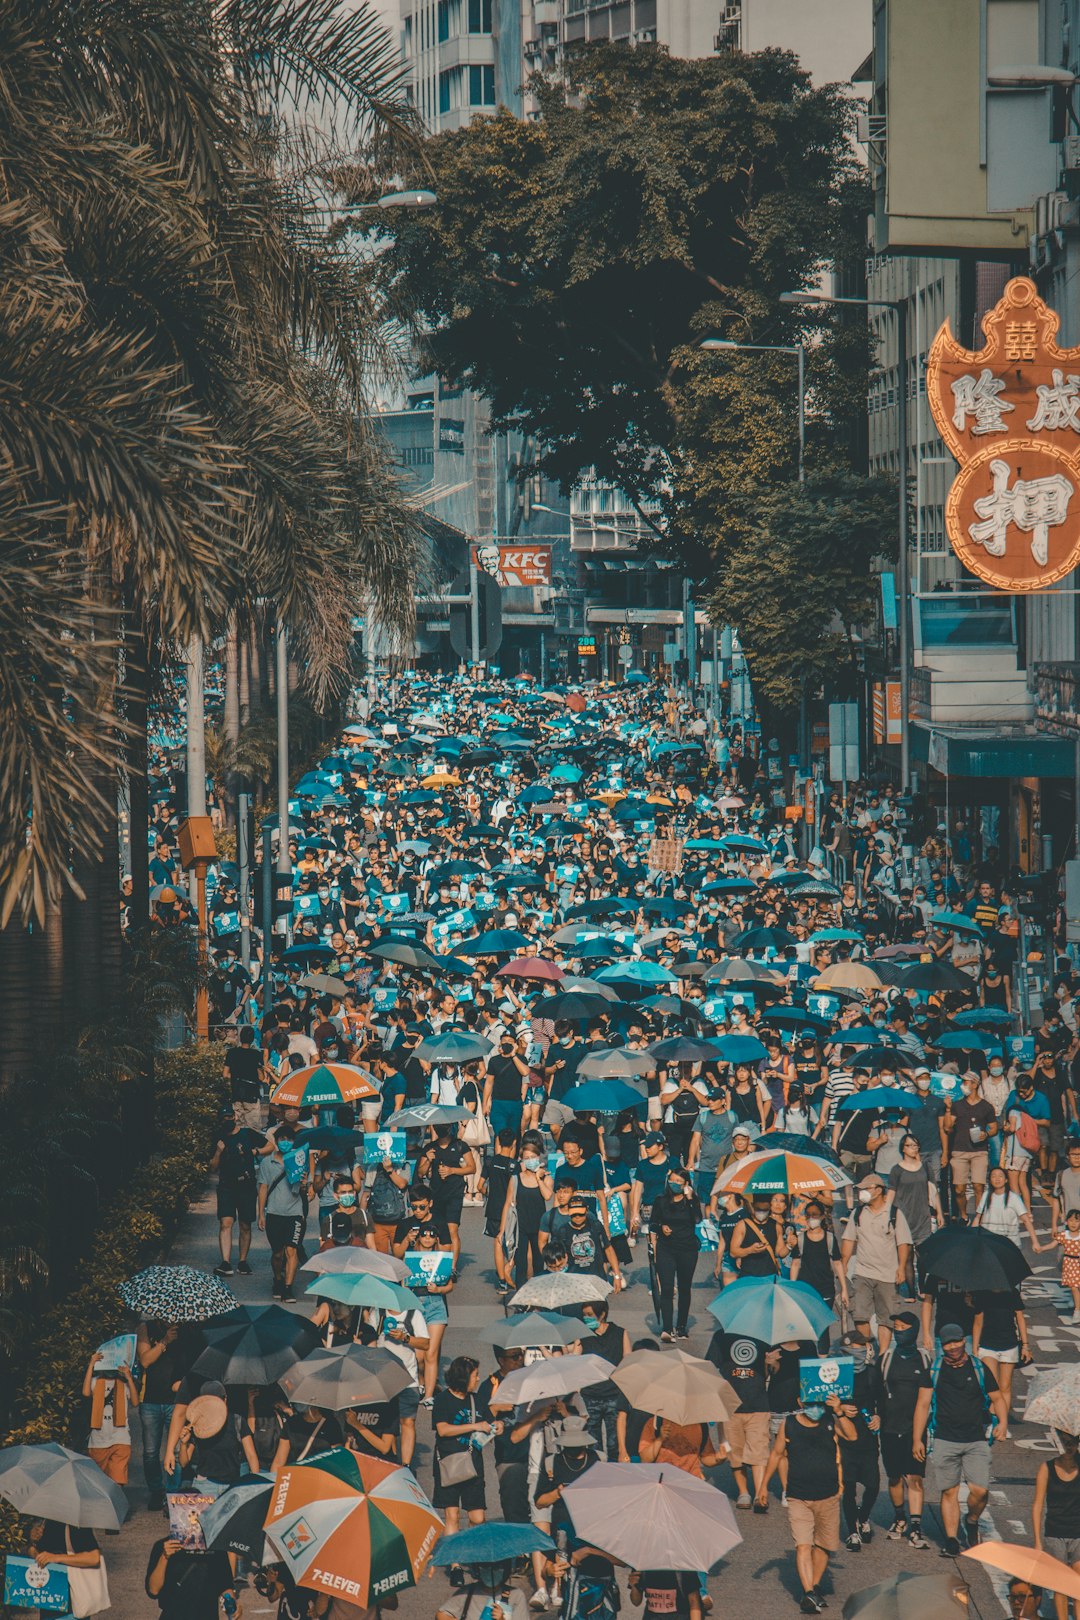 people walking on street with umbrellas